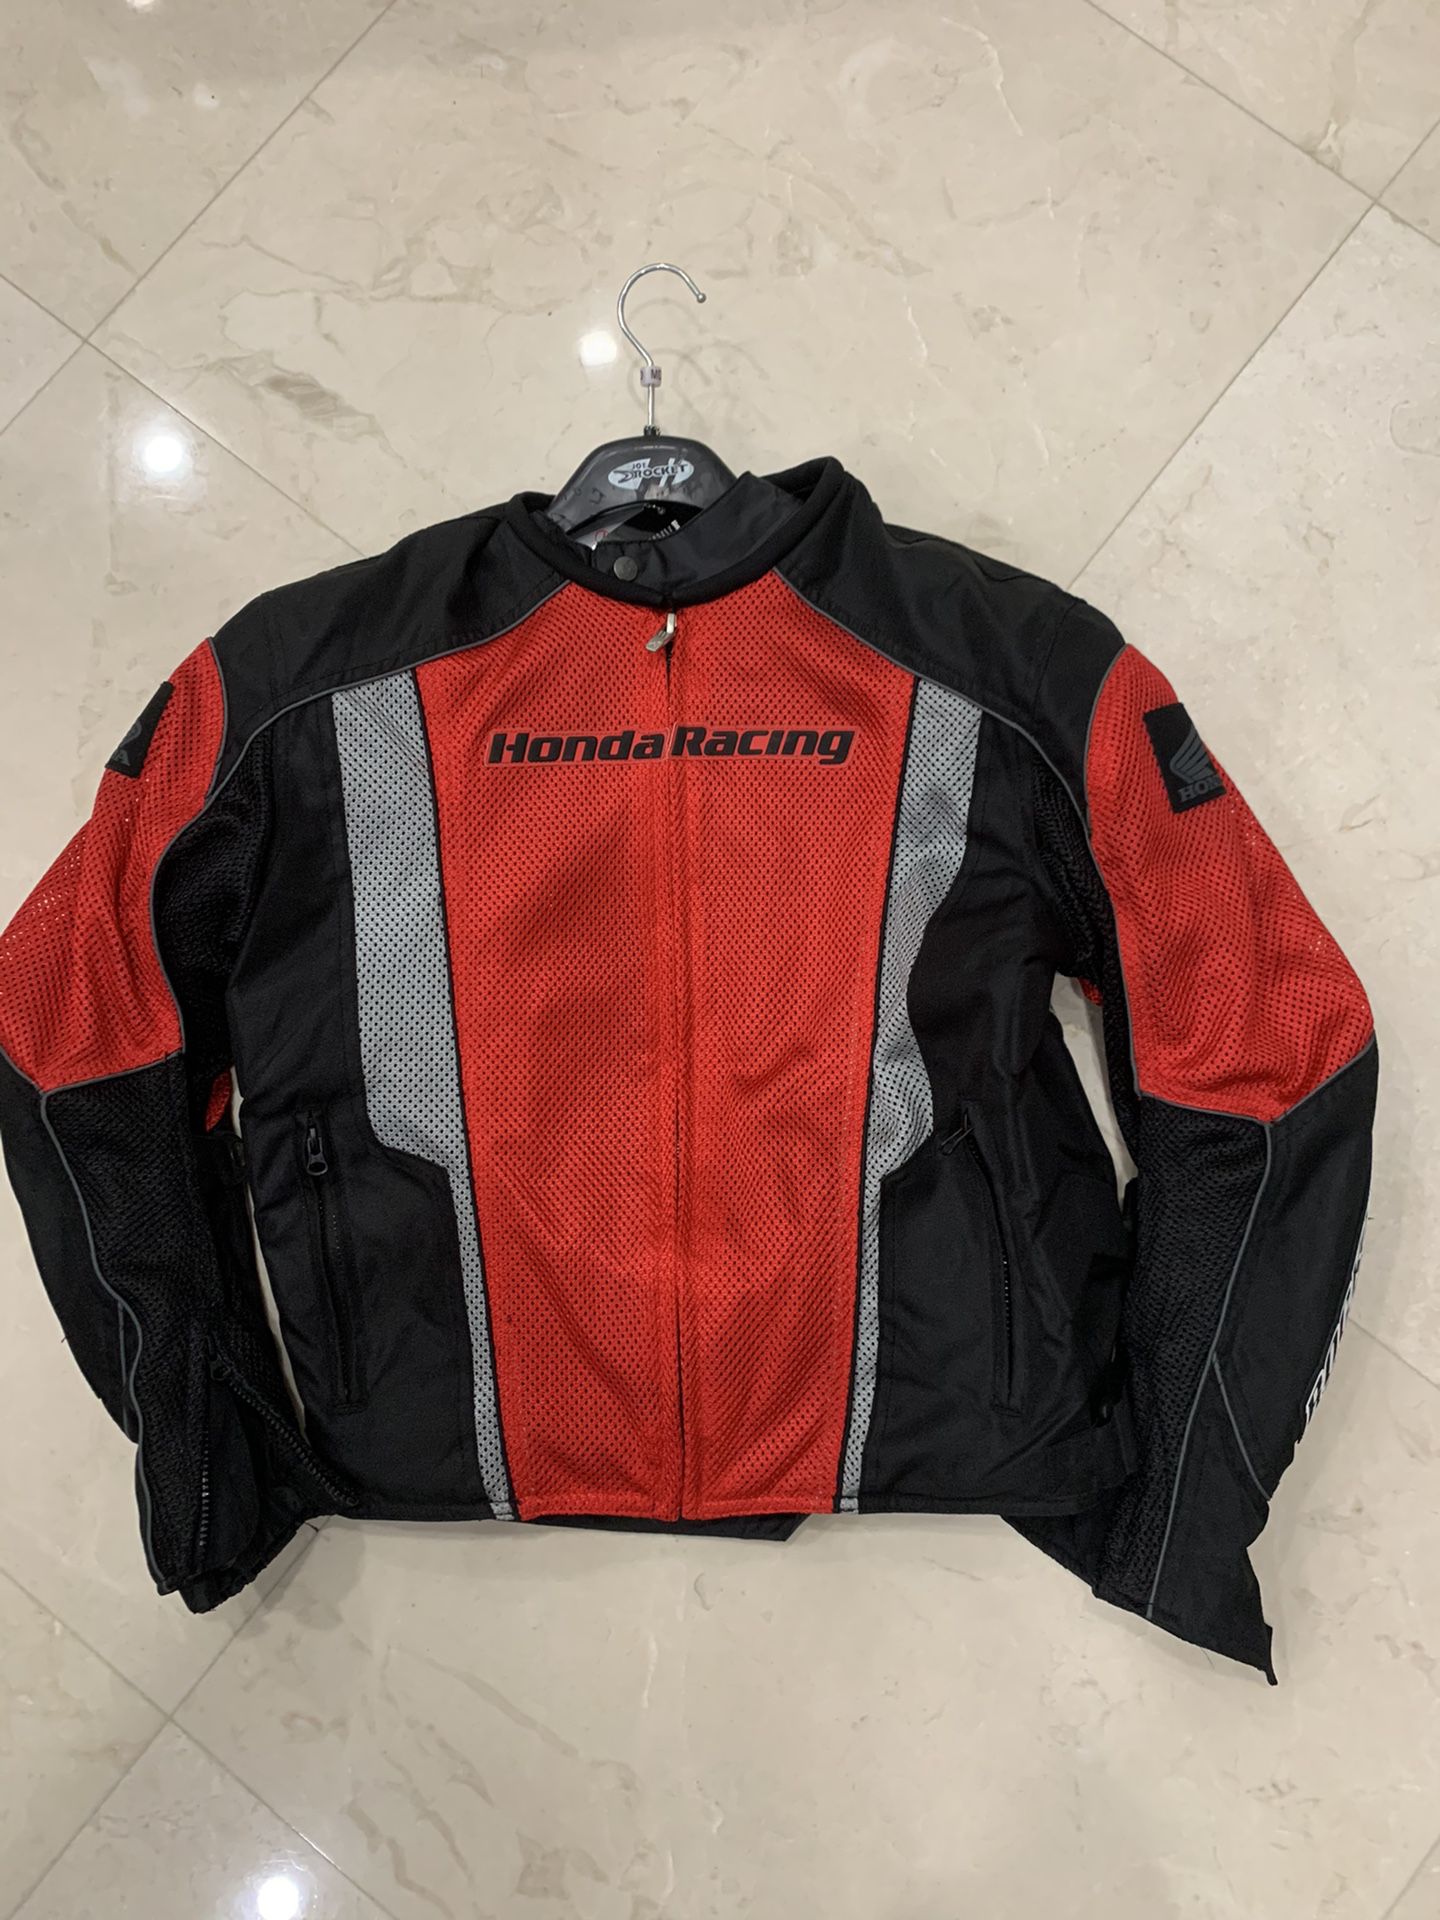 Honda Racing Motorcycle Jacket